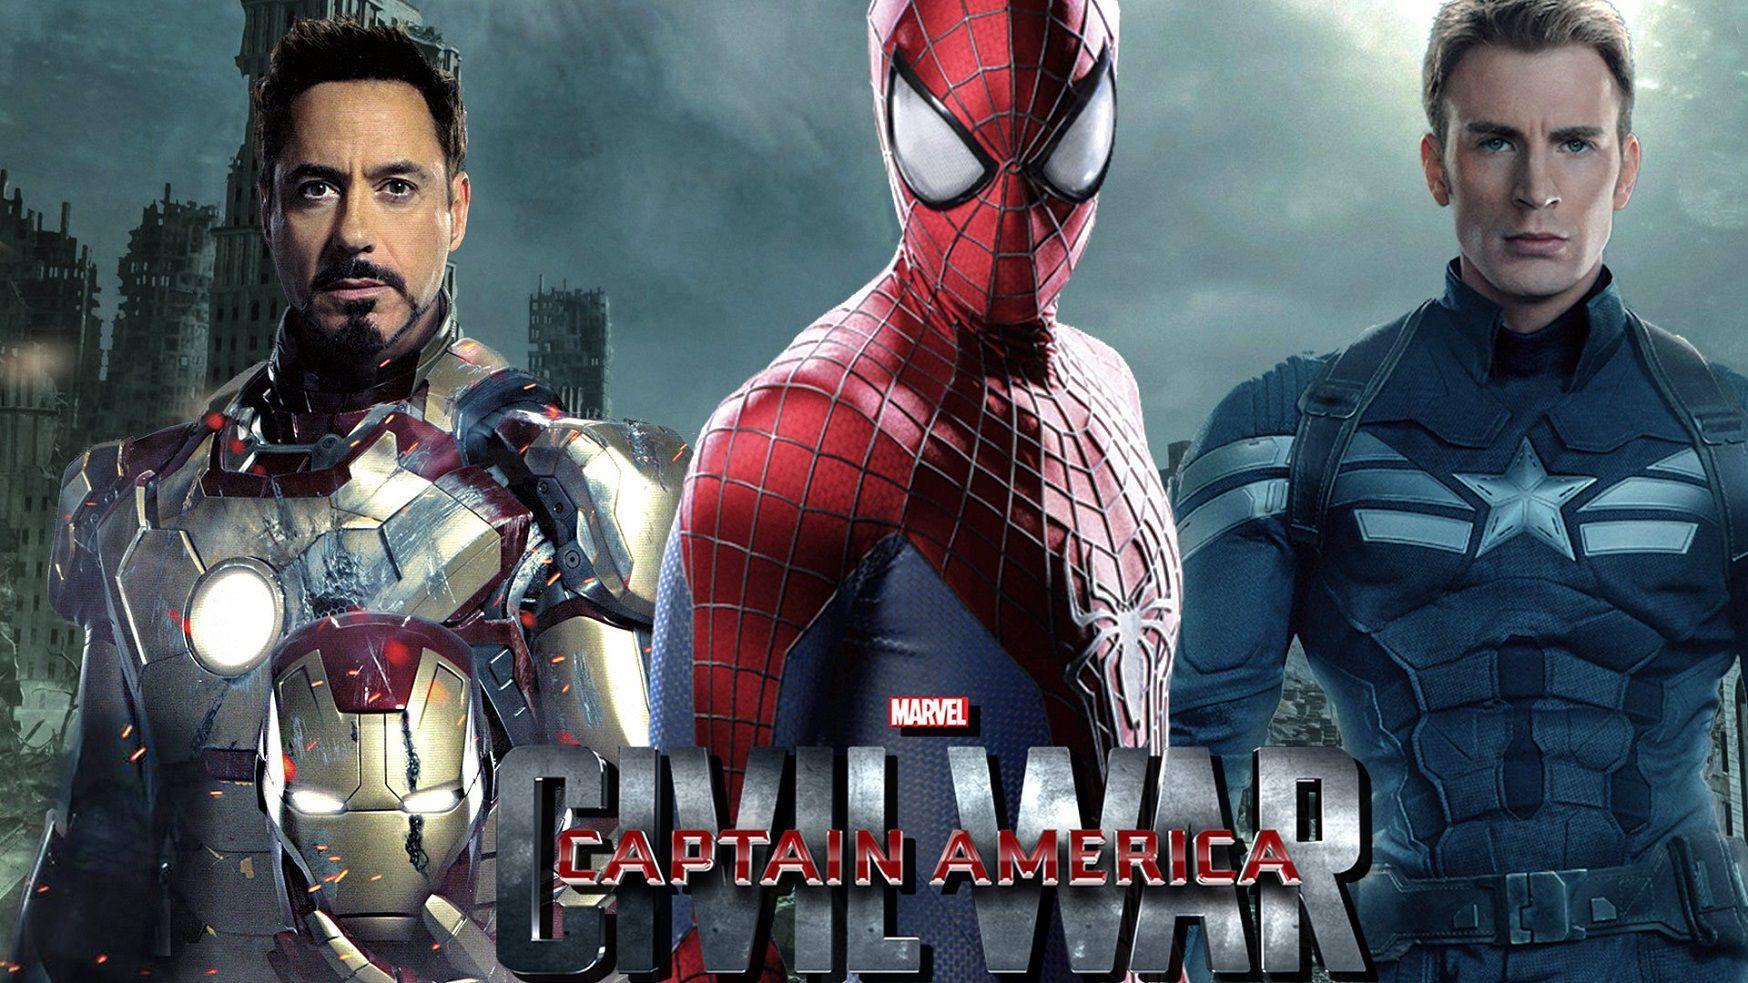 Spider Man Civil War Wallpapers Top Free Spider Man Civil War